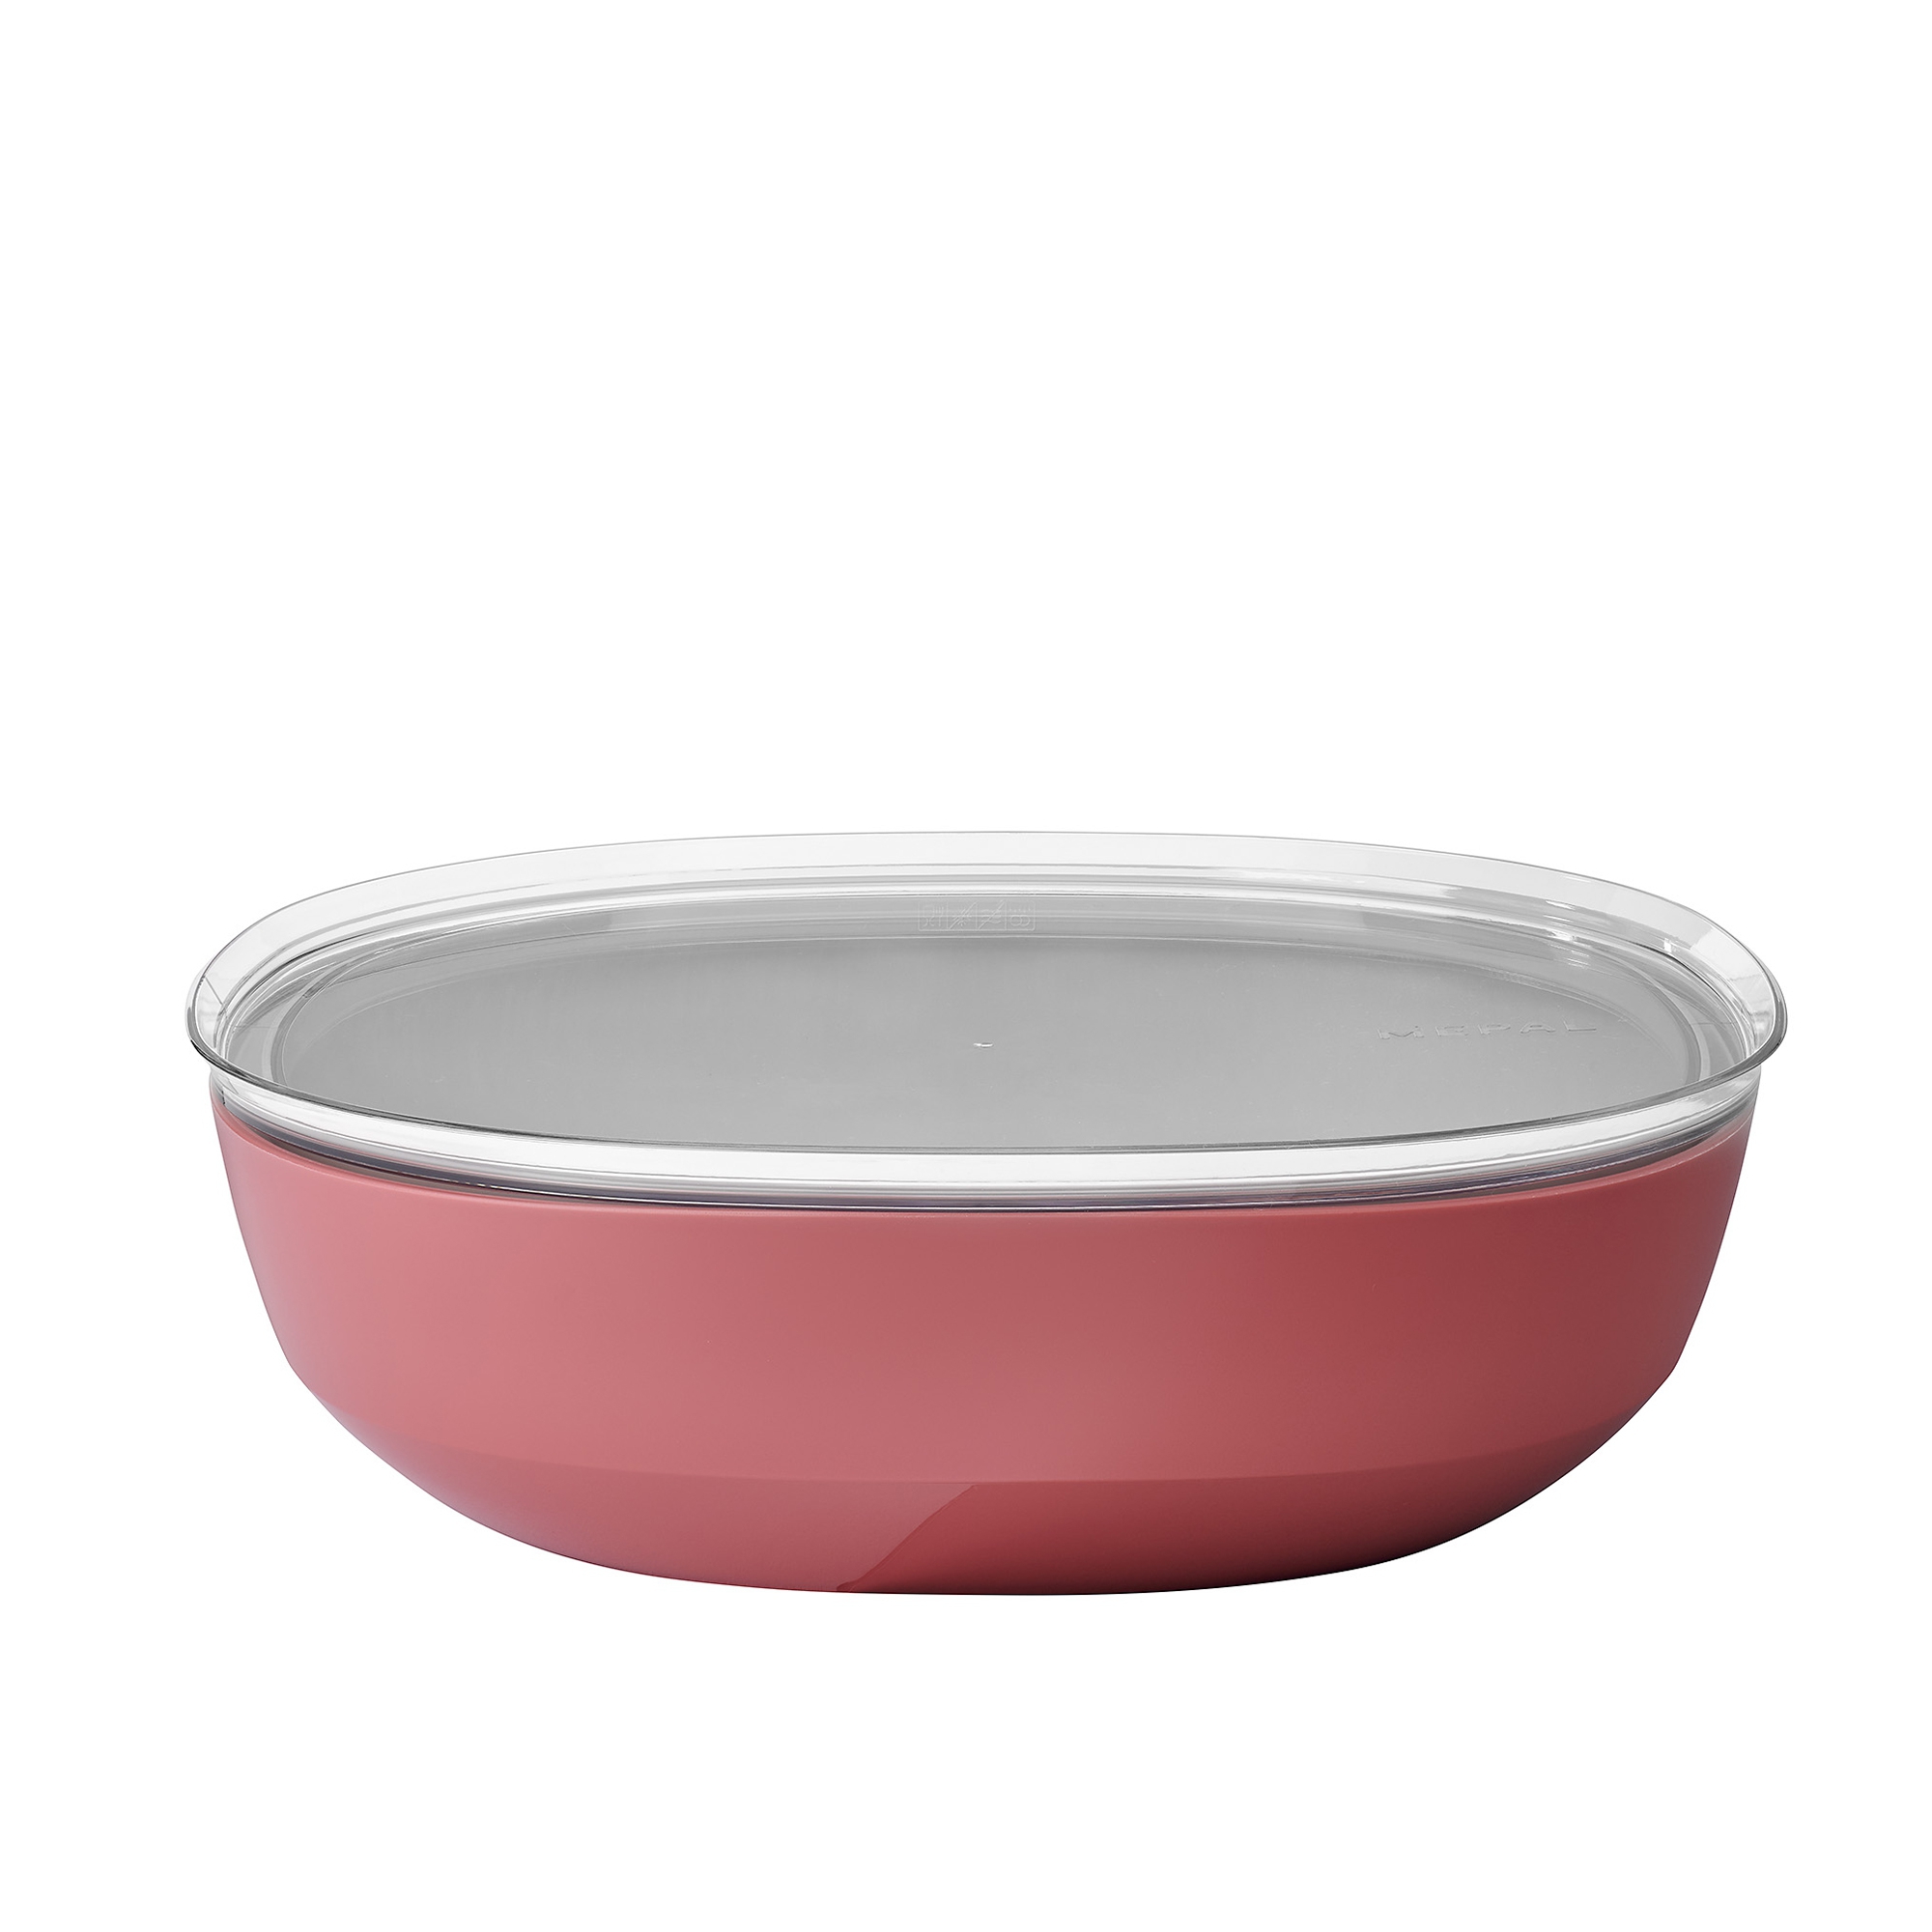 Mepal - Silueta serving bowl with lid - 4 L - Vivid mauve